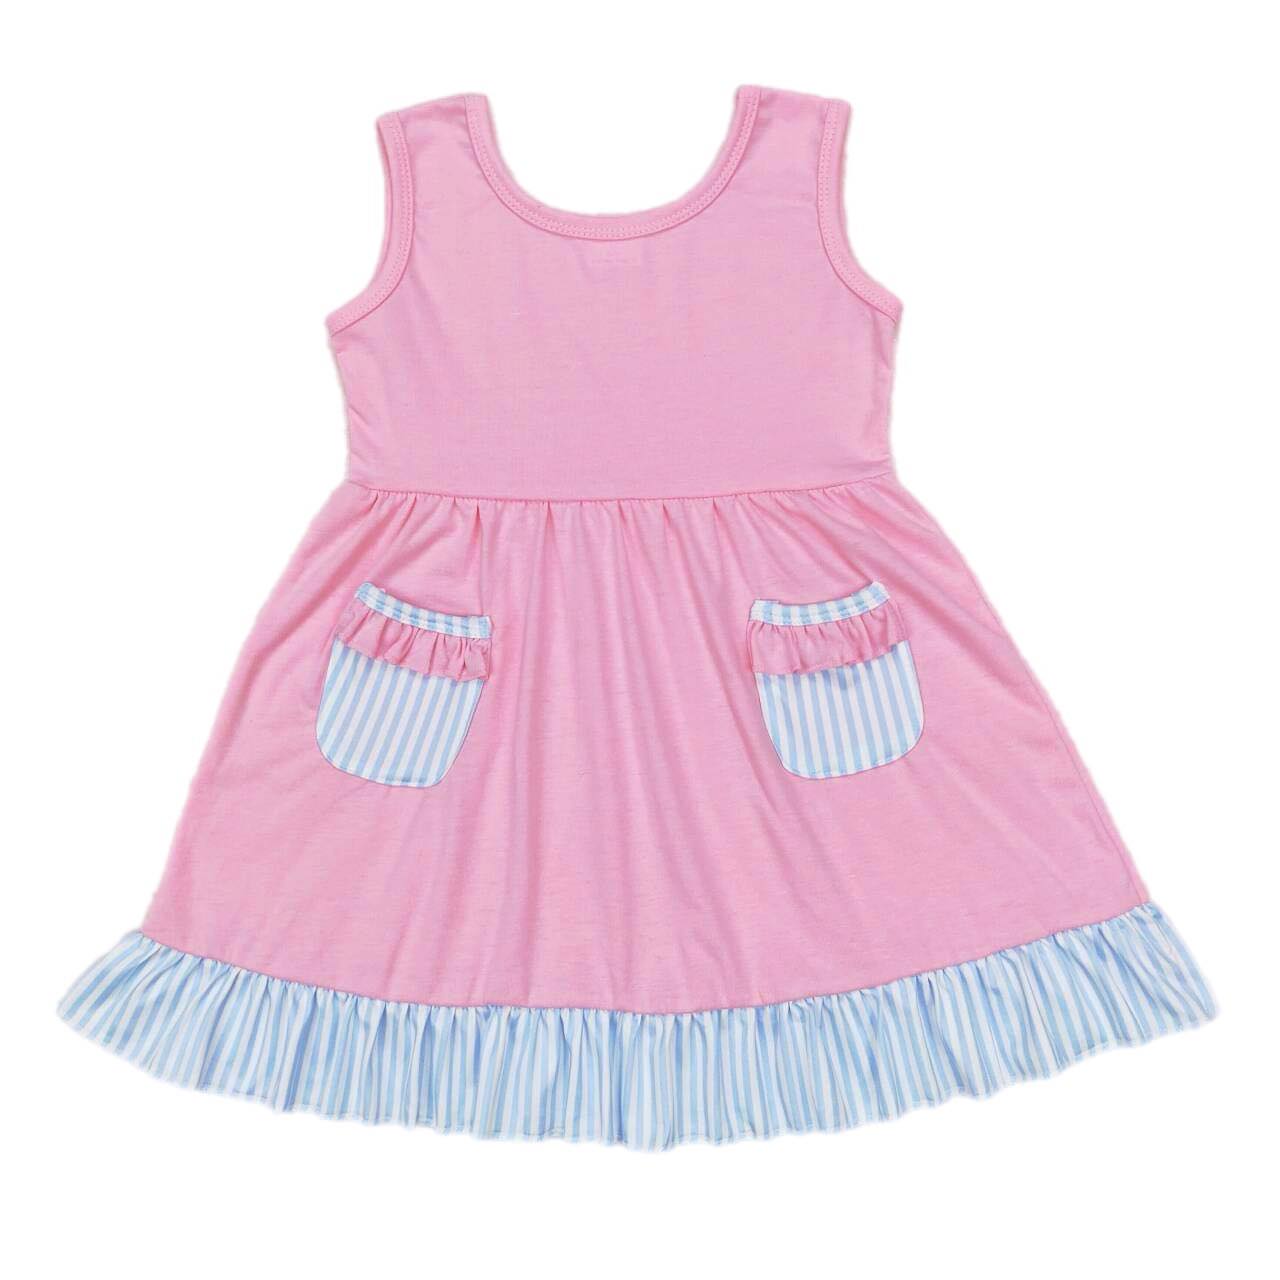 ᴡᴇᴇᴋʟʏ ᴘʀᴇ ᴏʀᴅᴇʀ Pink Ruffle Dress